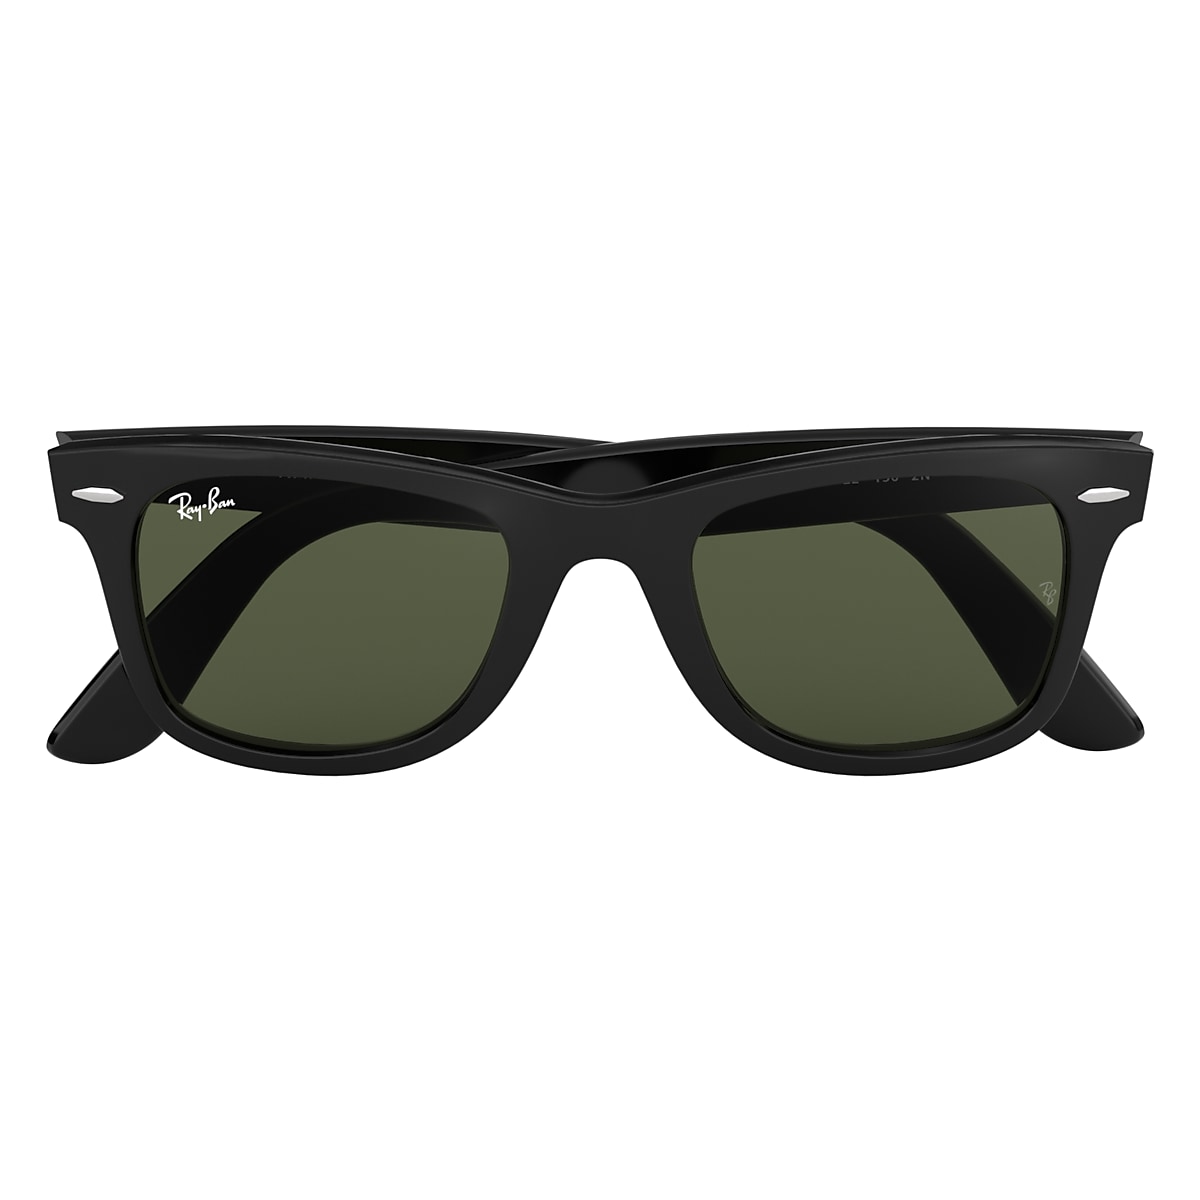 Riet grillen nieuwigheid Original Wayfarer Classic Sunglasses in Black and Green - RB2140 | Ray-Ban®  US